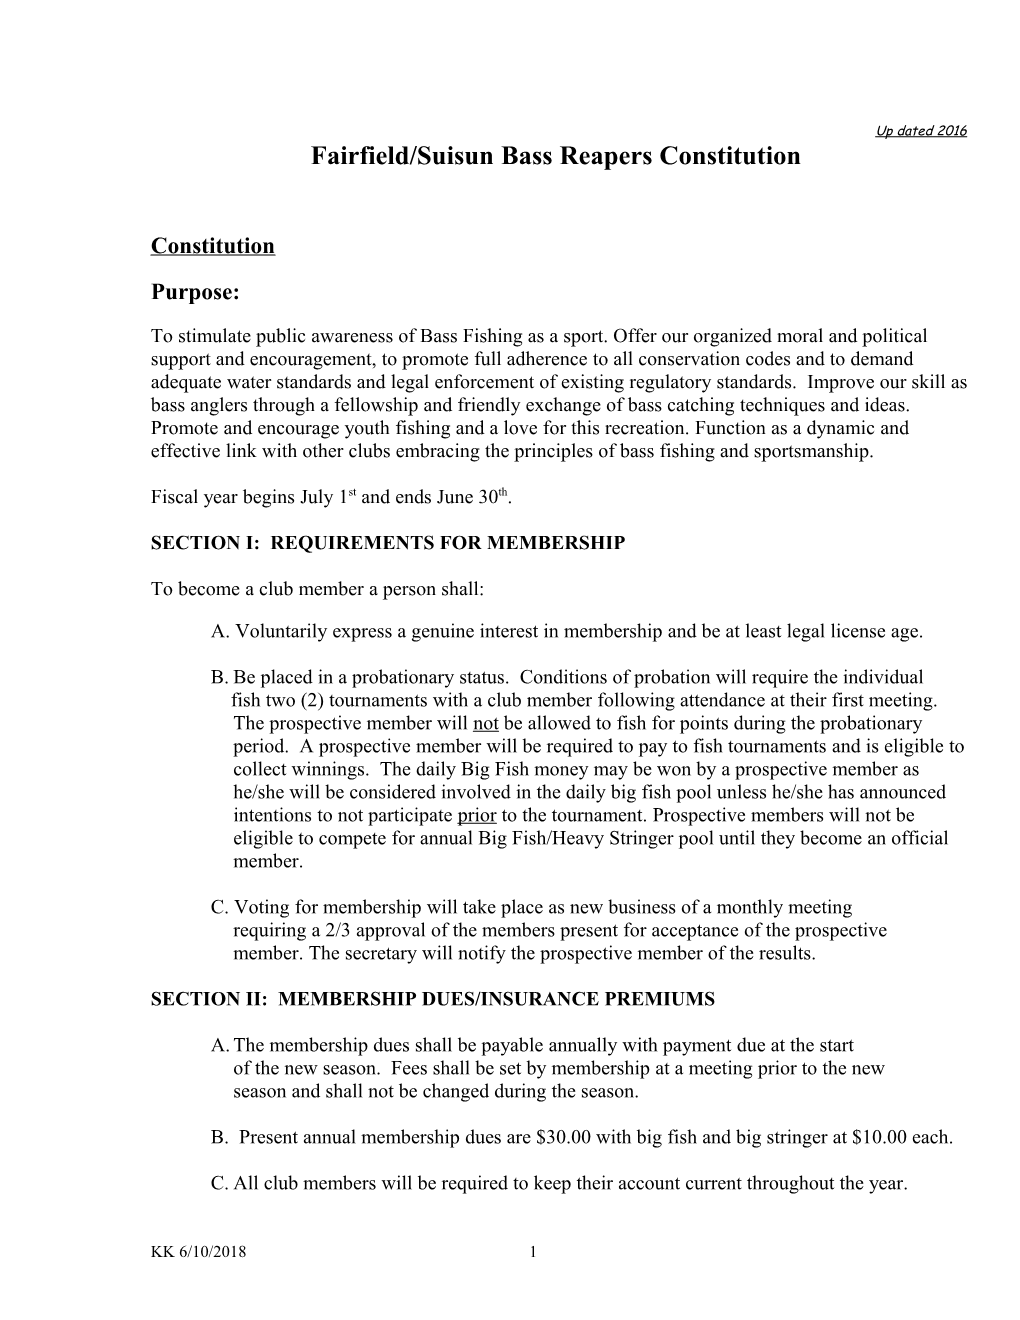 Fairfield/Suisun Bass Reapers Constitution